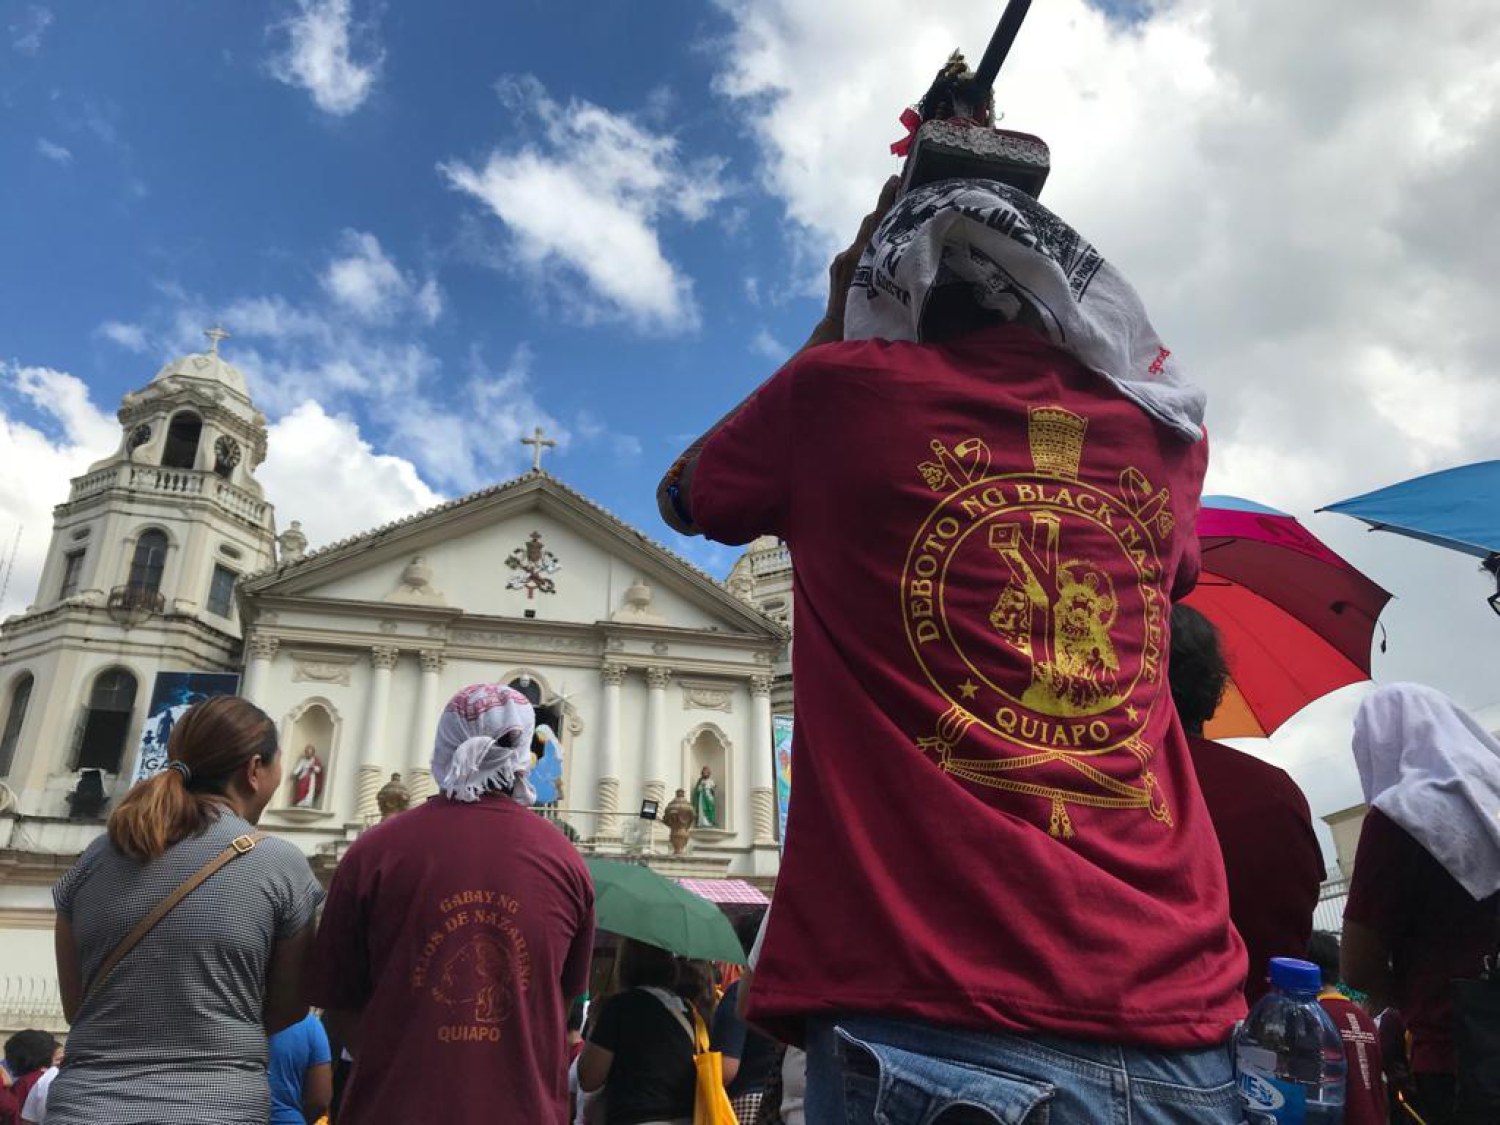 Nazarene devotees around Quiapo swell to 100,000 before noon